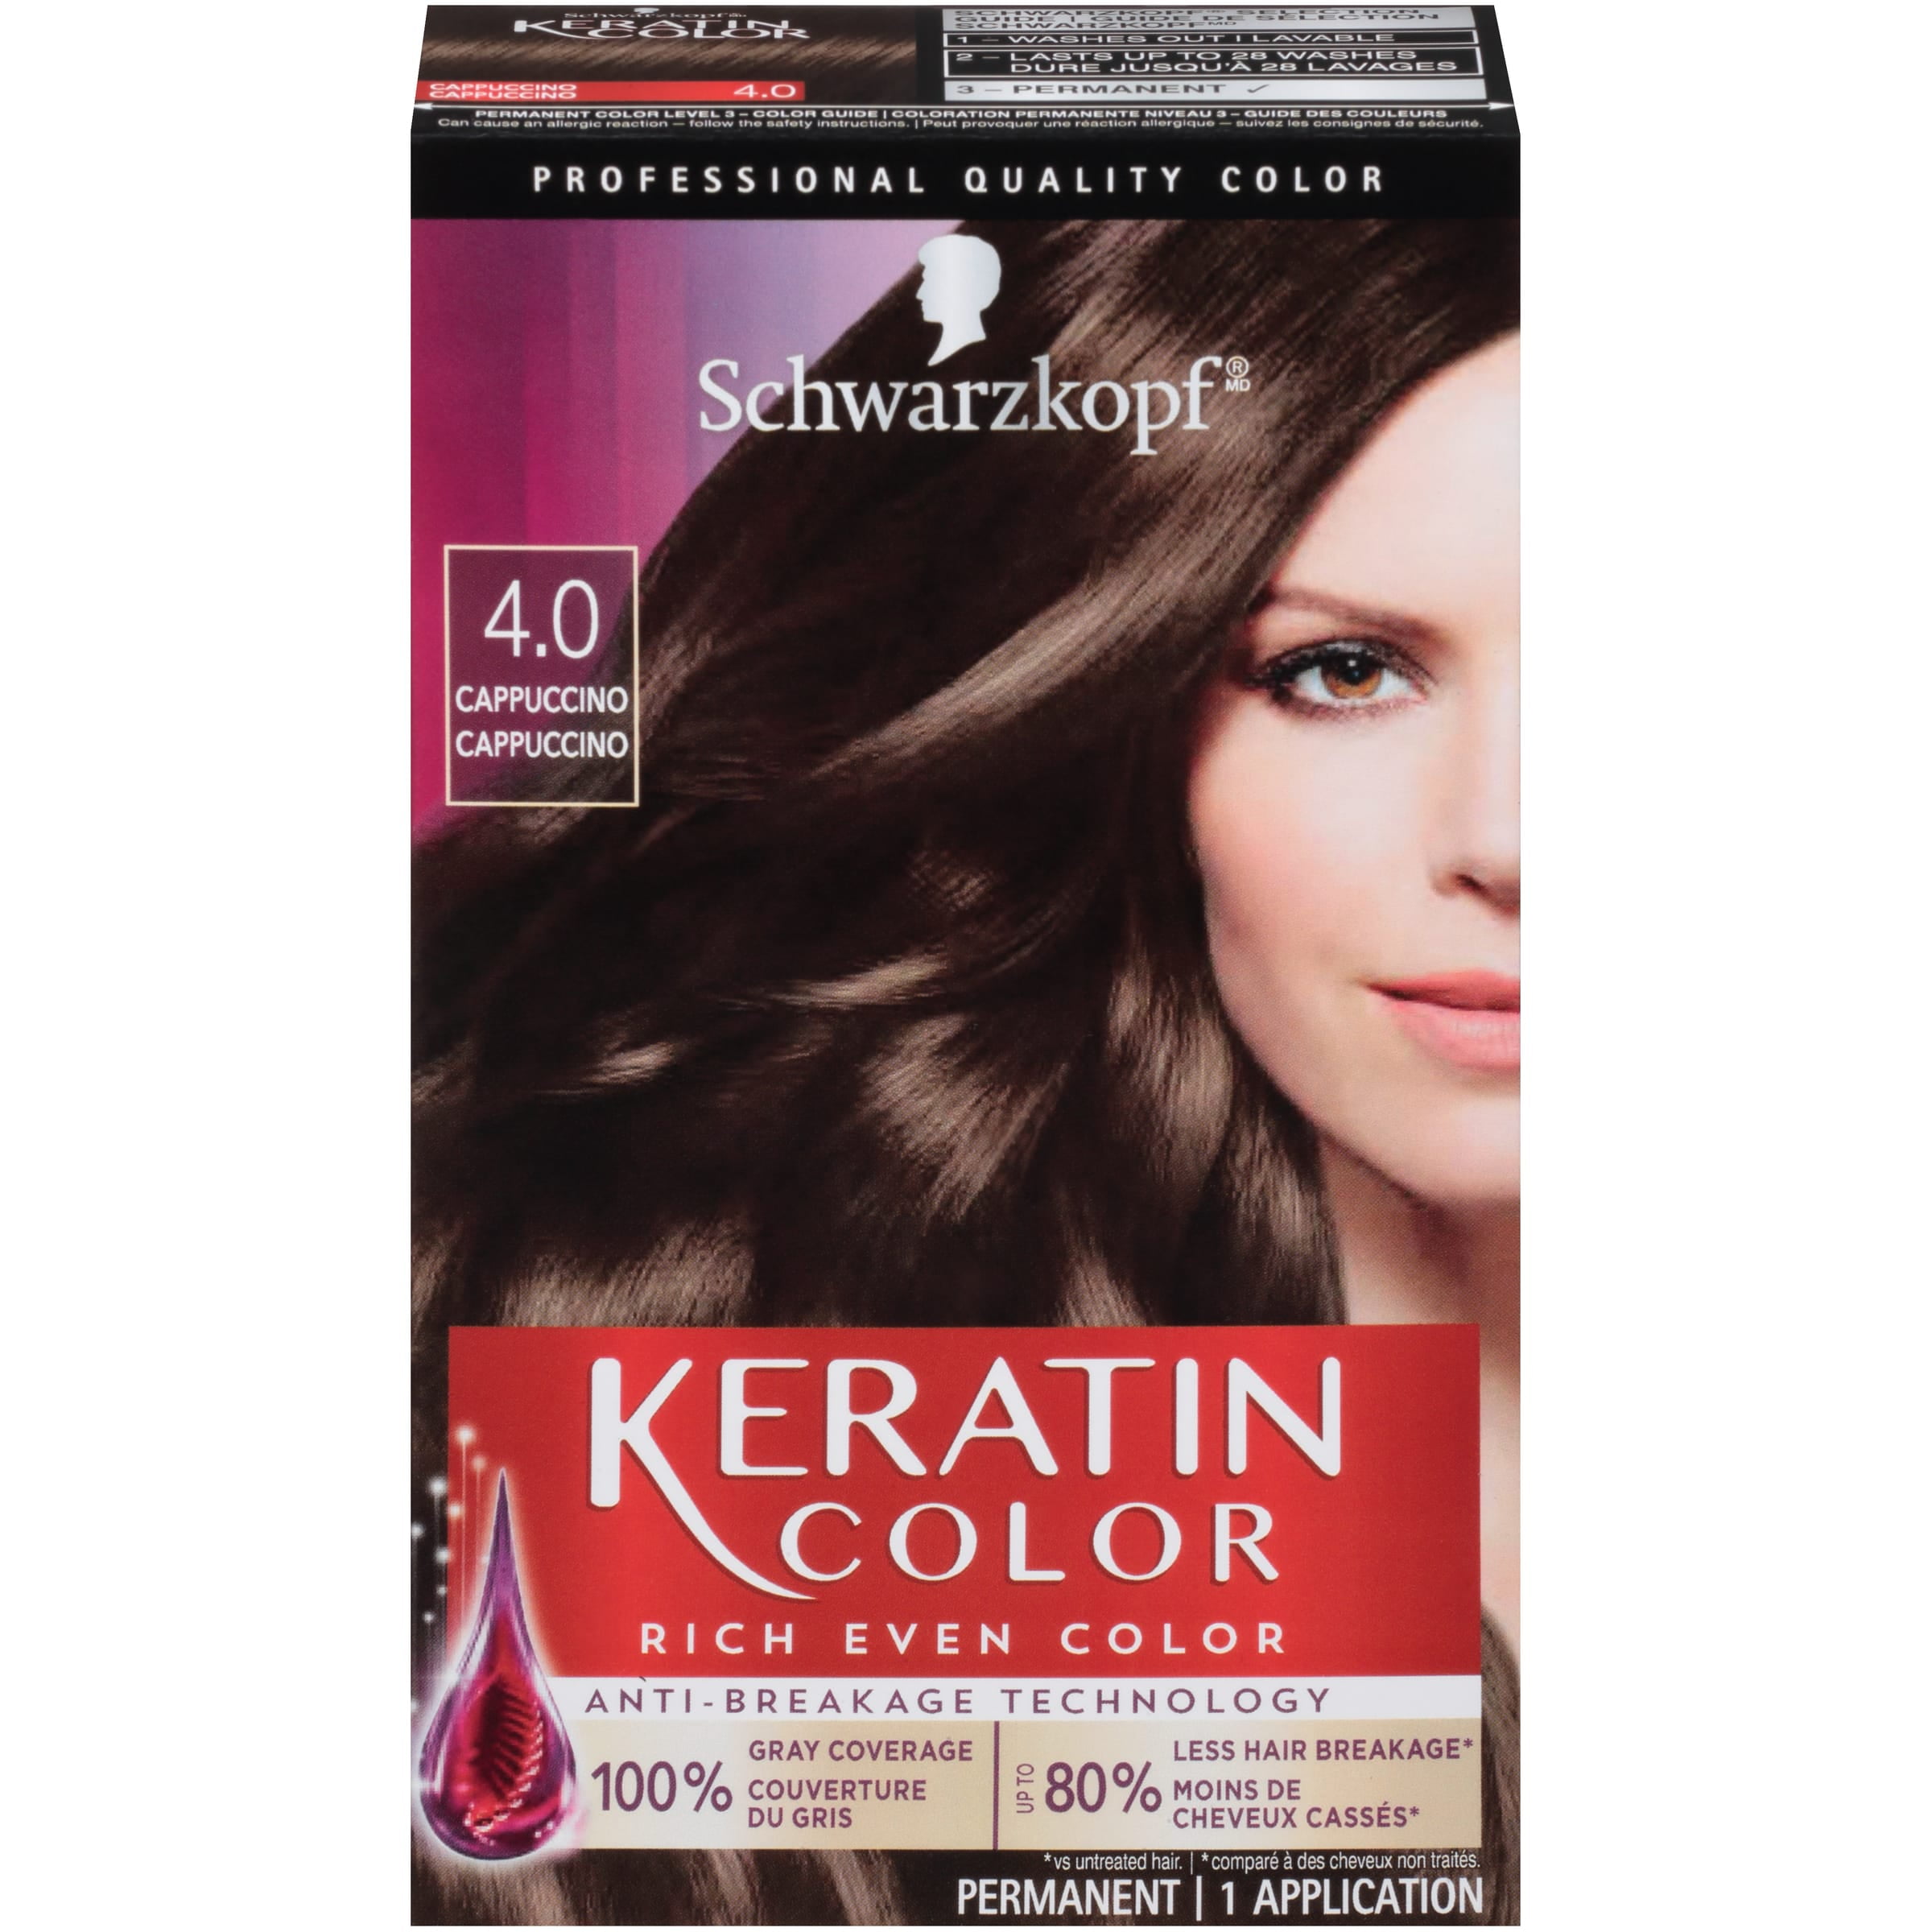 Schwarzkopf Keratin Color Permanent Hair Color Cream, 4.0 Cappuccino